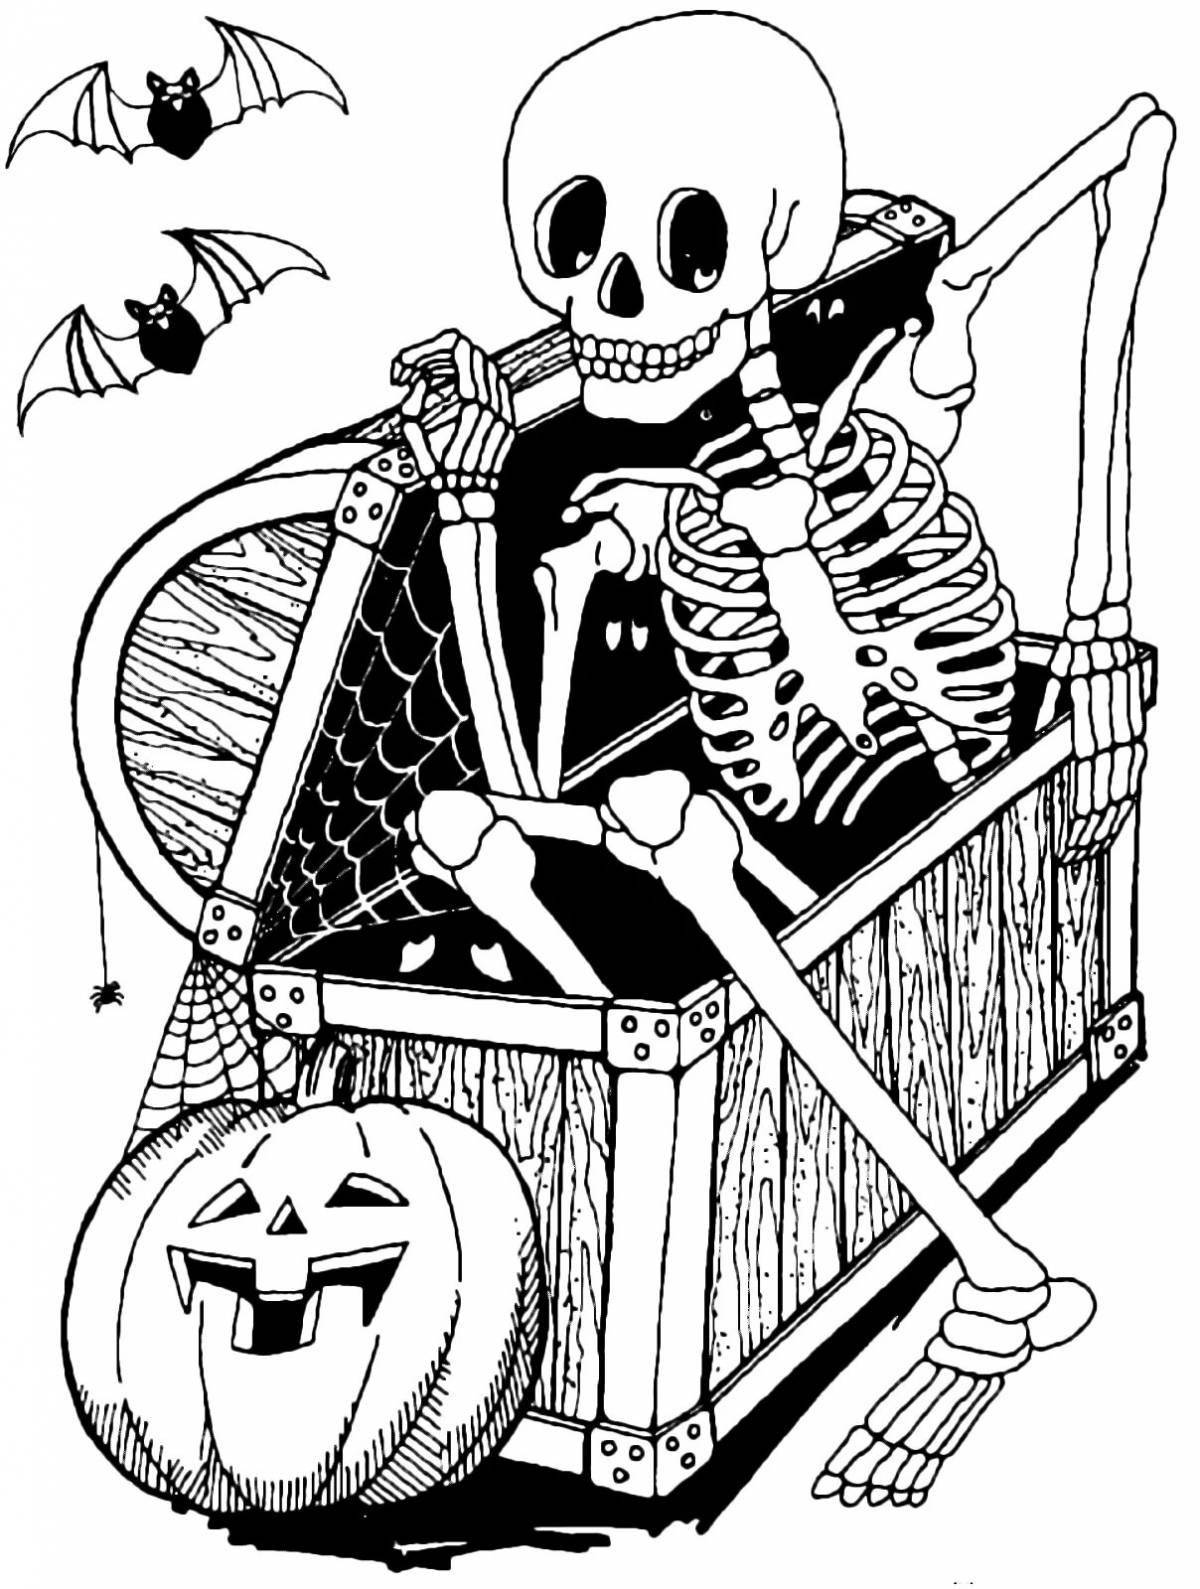 Frightening skeleton coloring page